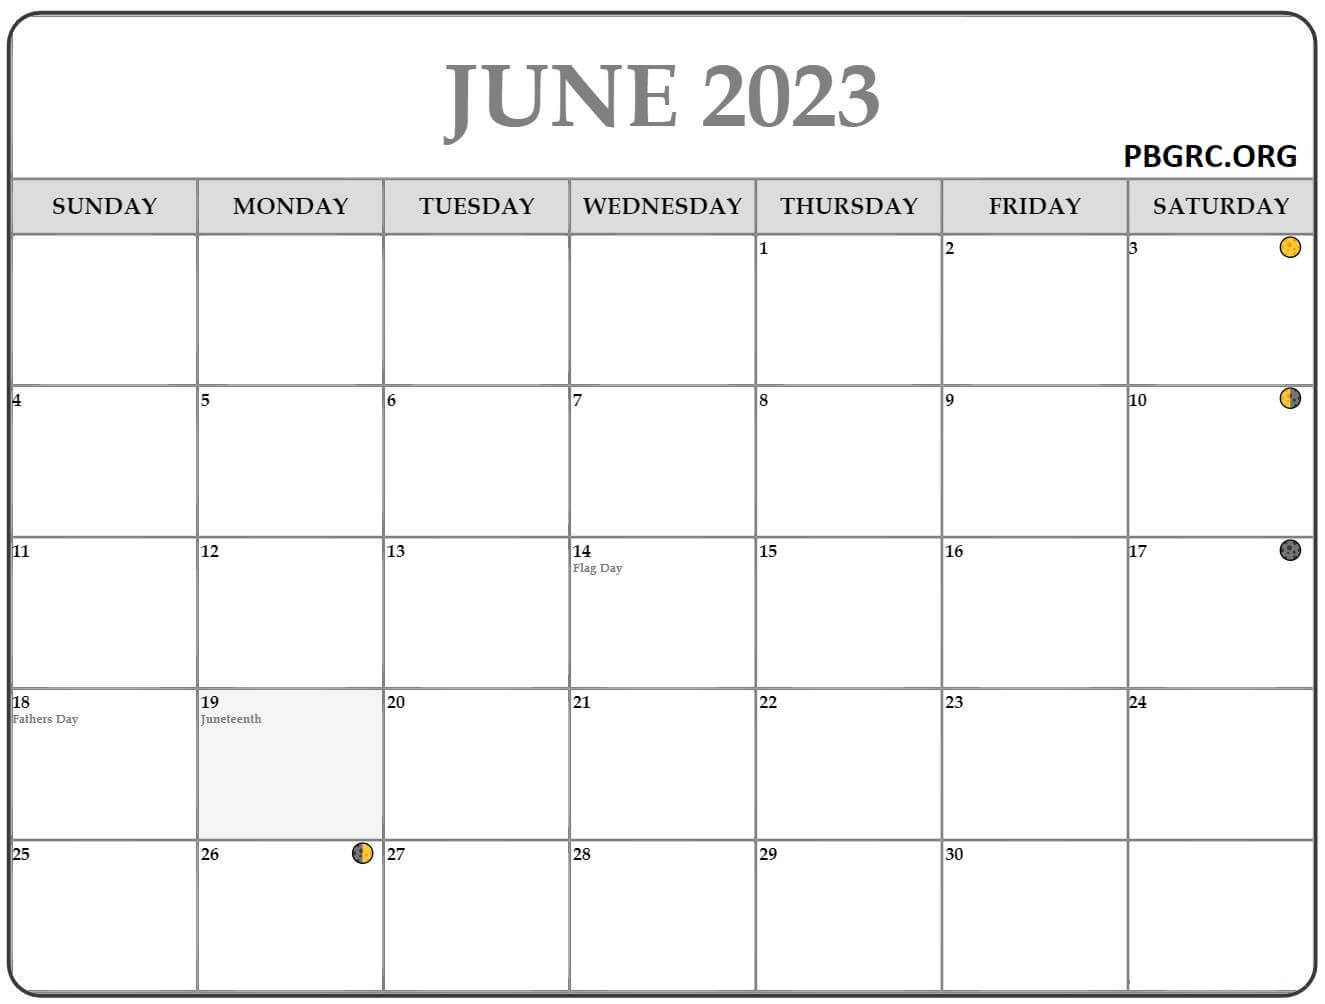 June 2023 Moon Calendar Phases